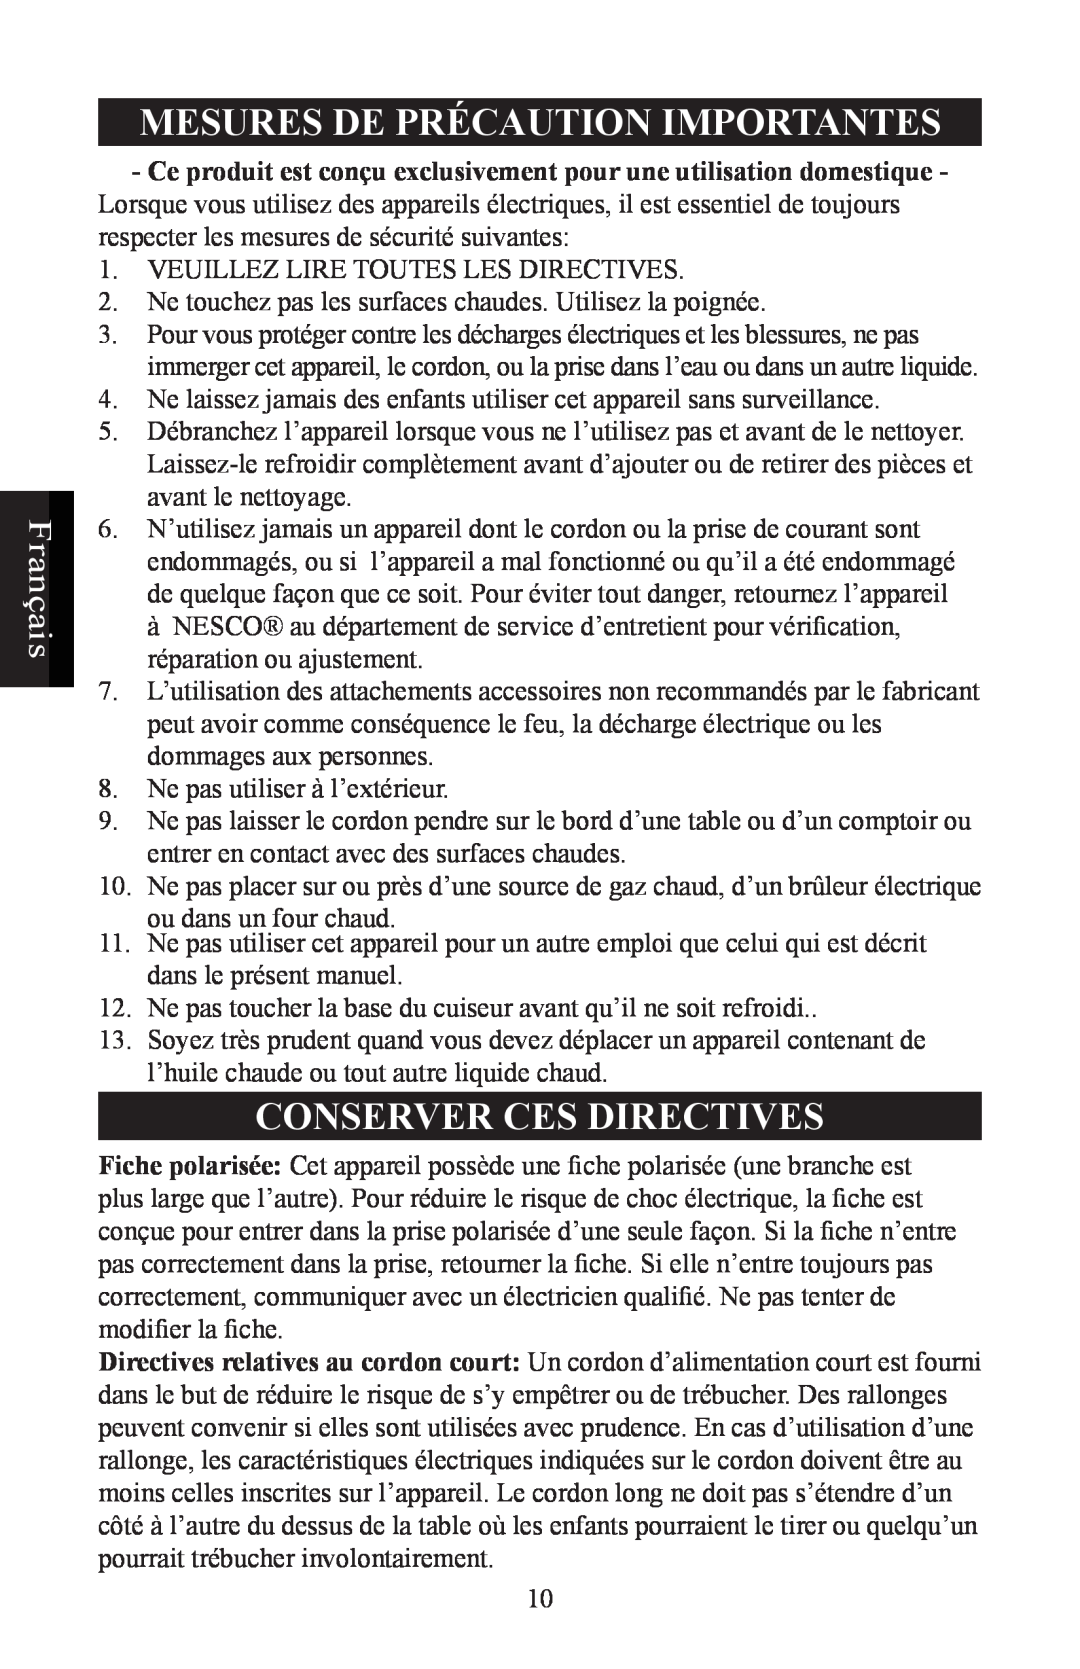 Nesco ST-24 manual Français, Mesures De Précaution Importantes, Conserver Ces Directives 